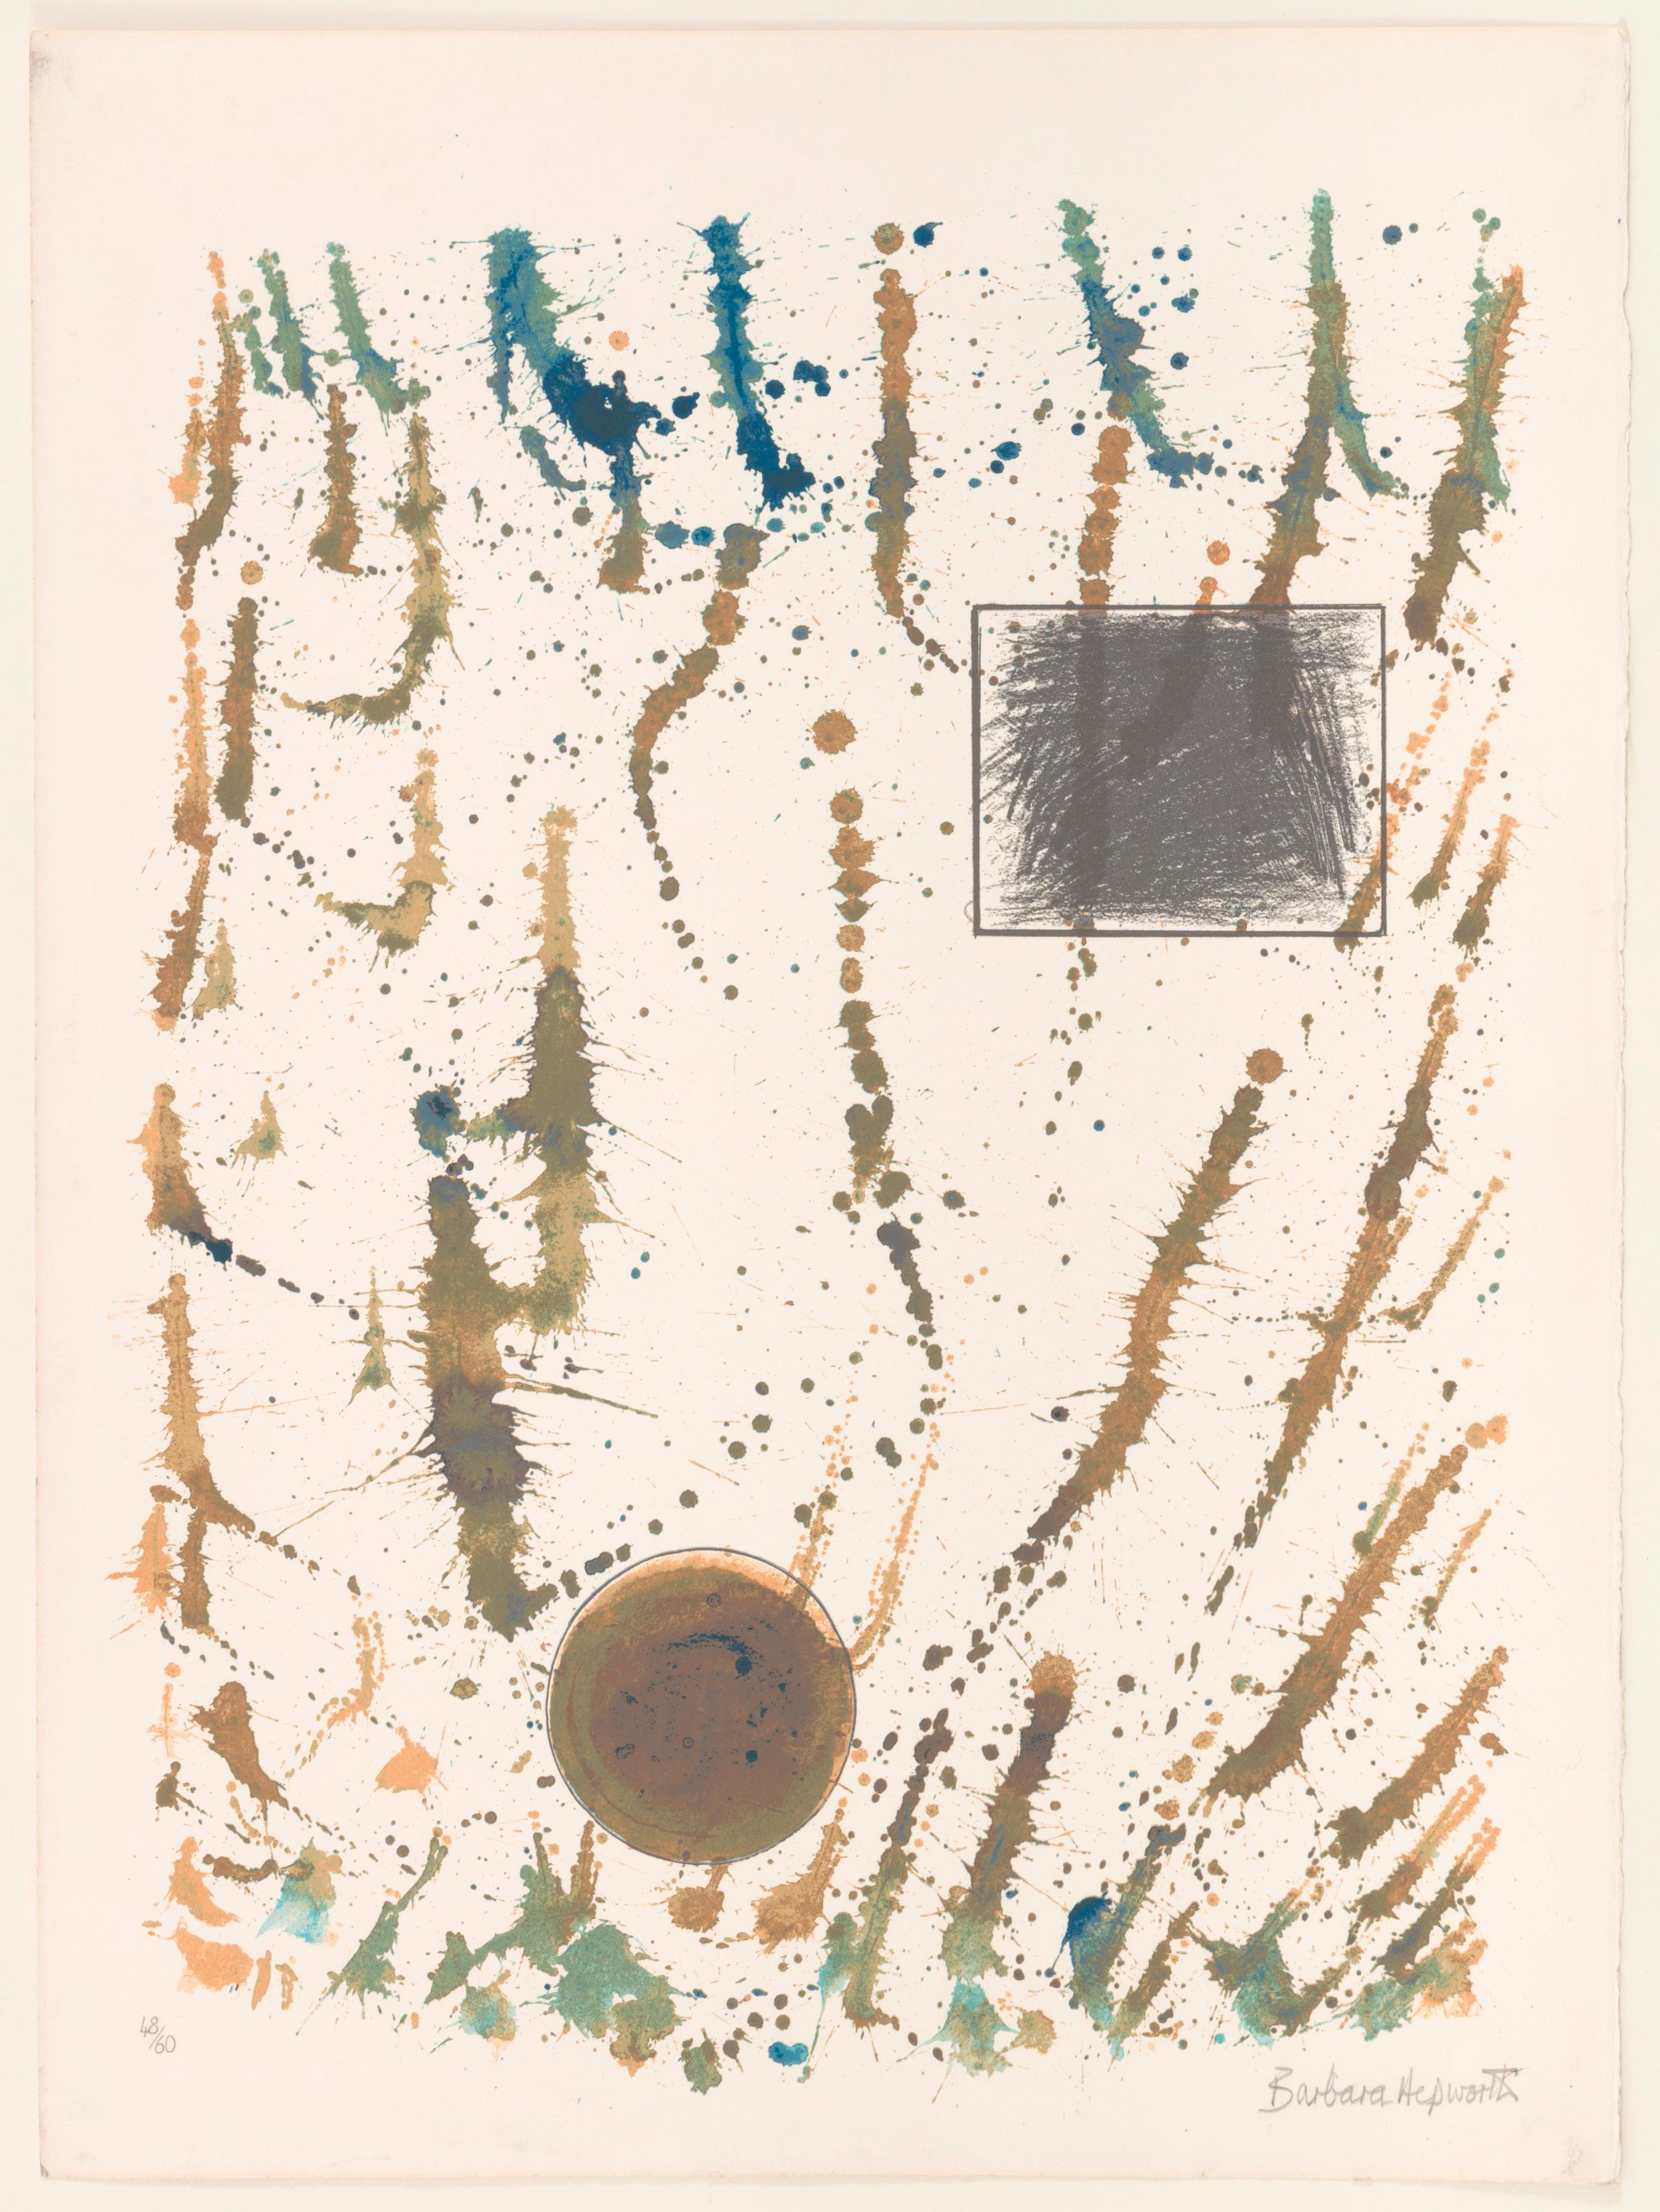 Barbara Hepworth
Opposing Forms, 1971
portfolio of 12 screenprints, edition of 60
30 3/8 x 22 7/8 in. / 77.2 x 58.1 cm